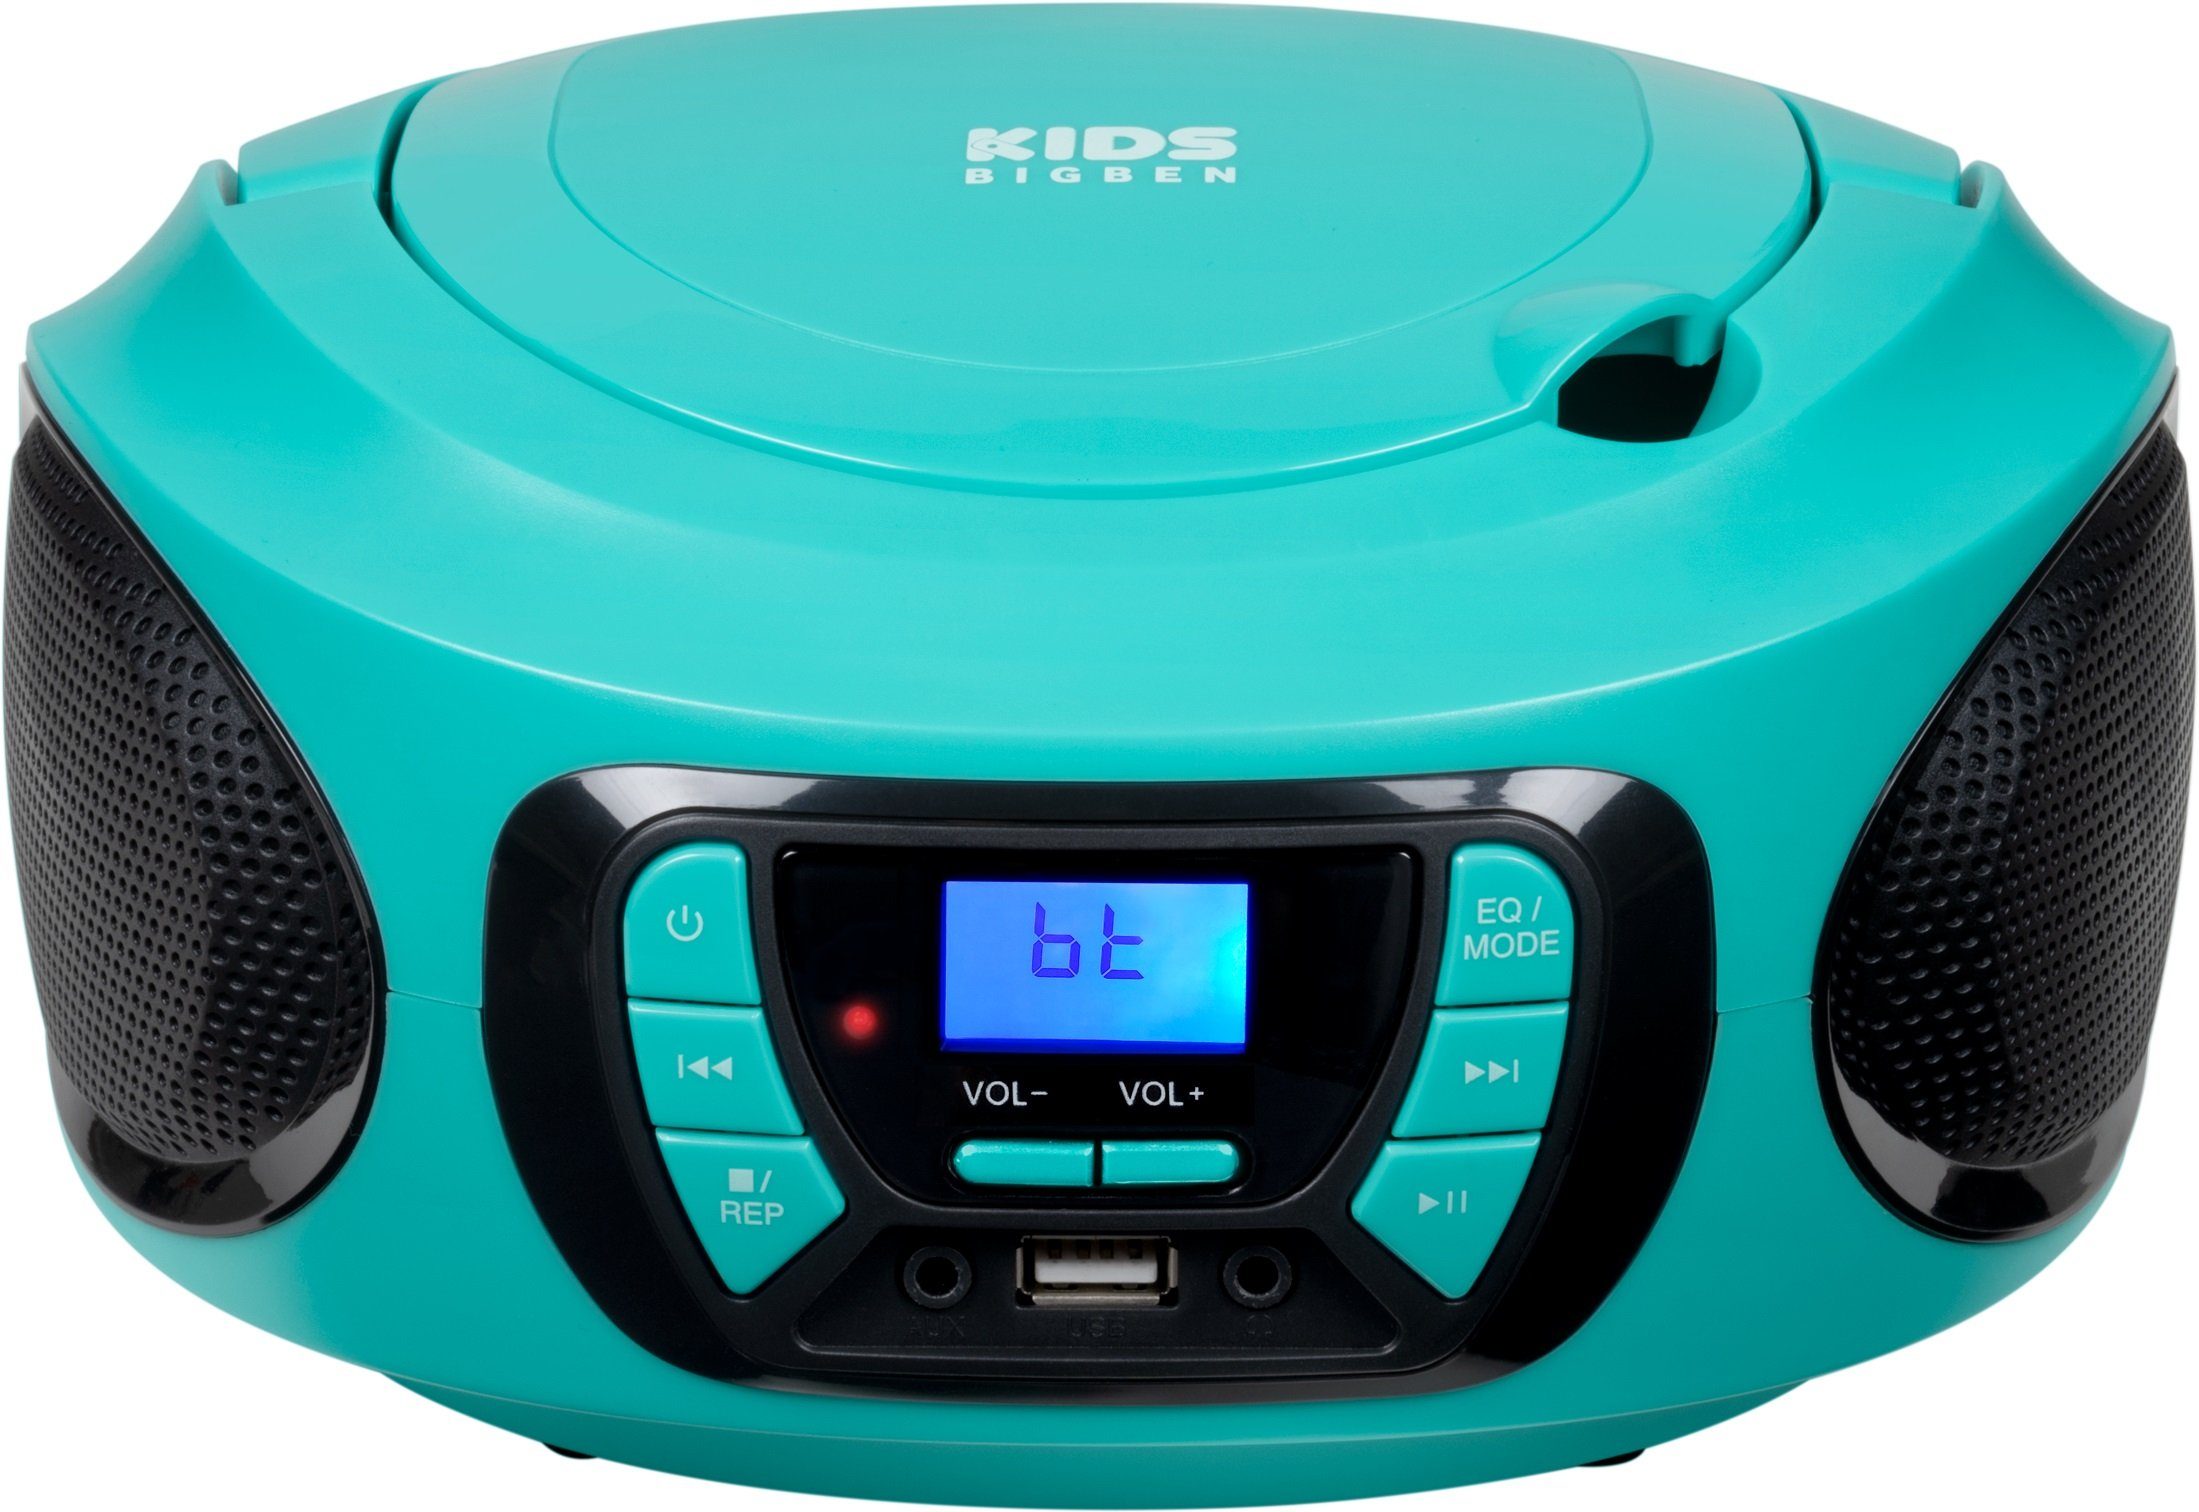 AU387315 (FM-Tuner) Tragbares USB/BT BigBen CD/Radio blau CD-Radiorecorder Kids